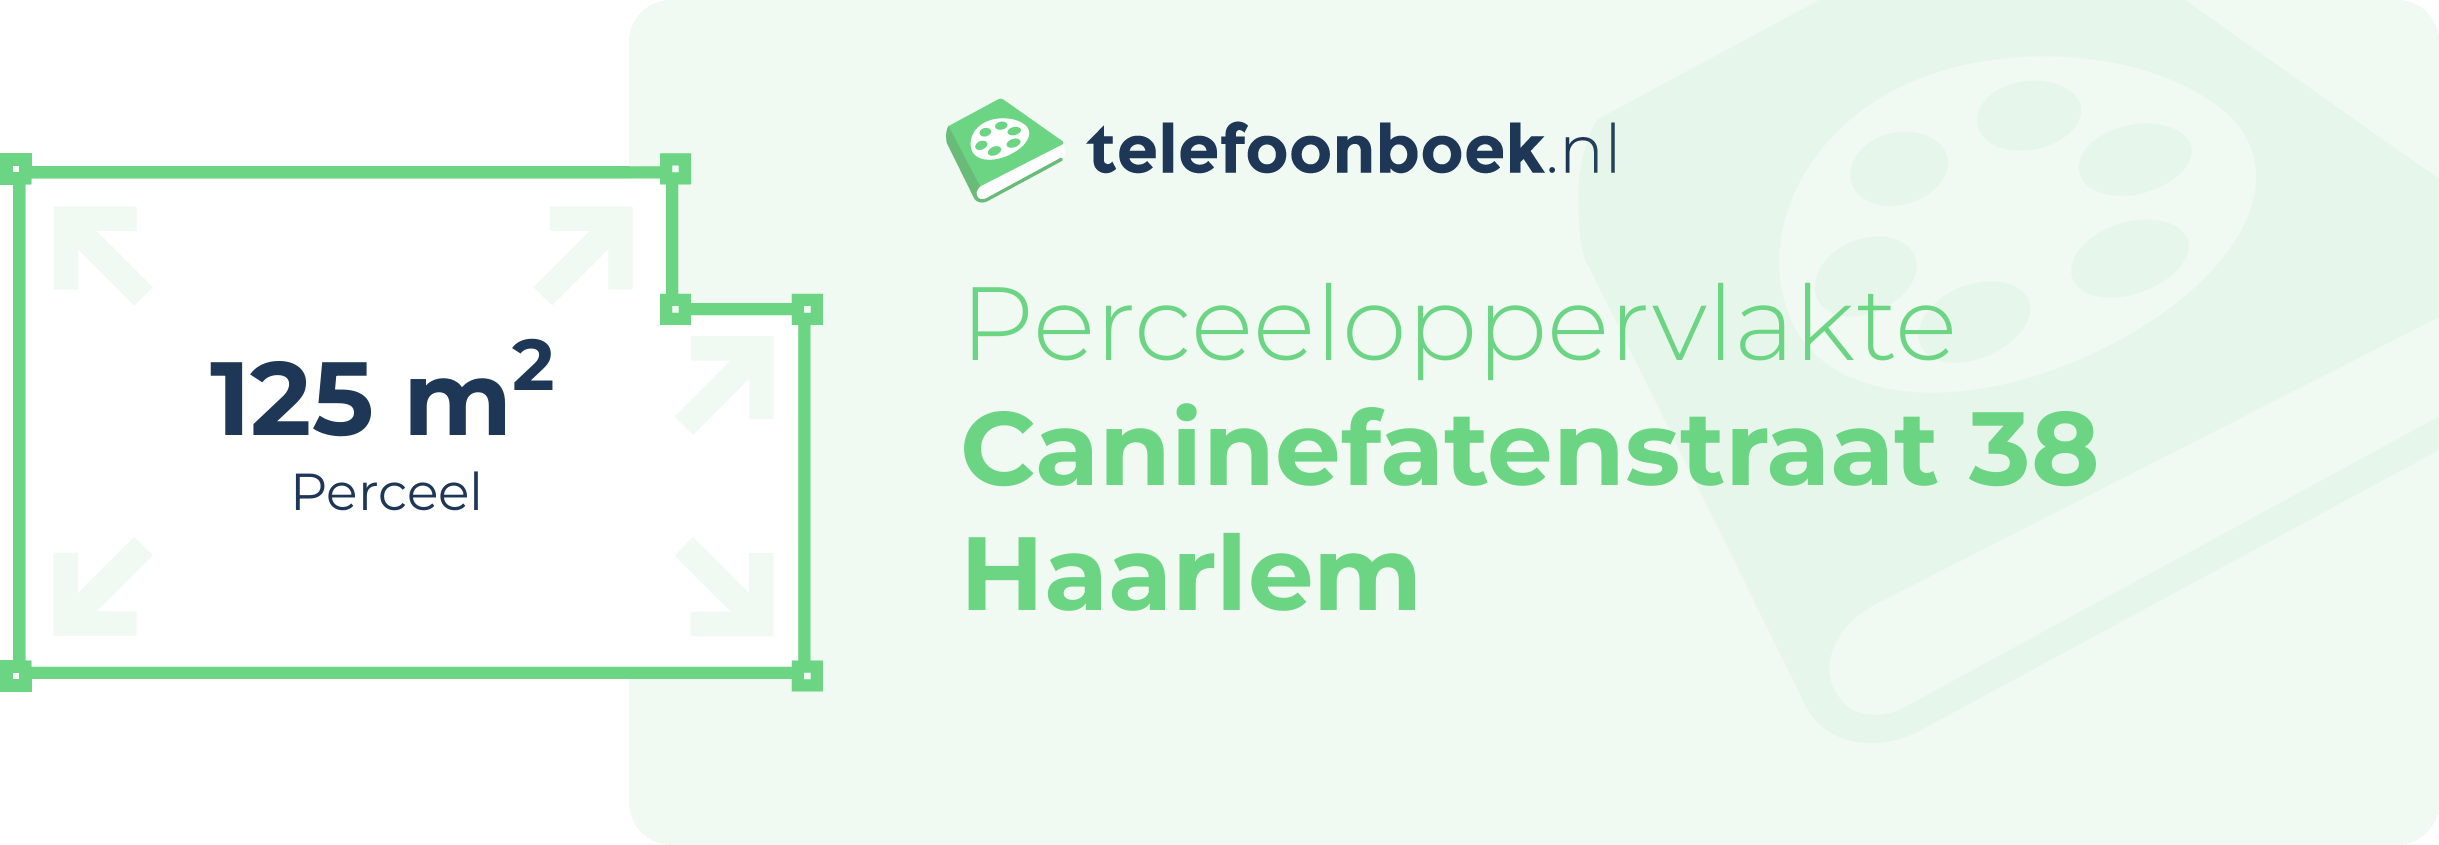 Perceeloppervlakte Caninefatenstraat 38 Haarlem